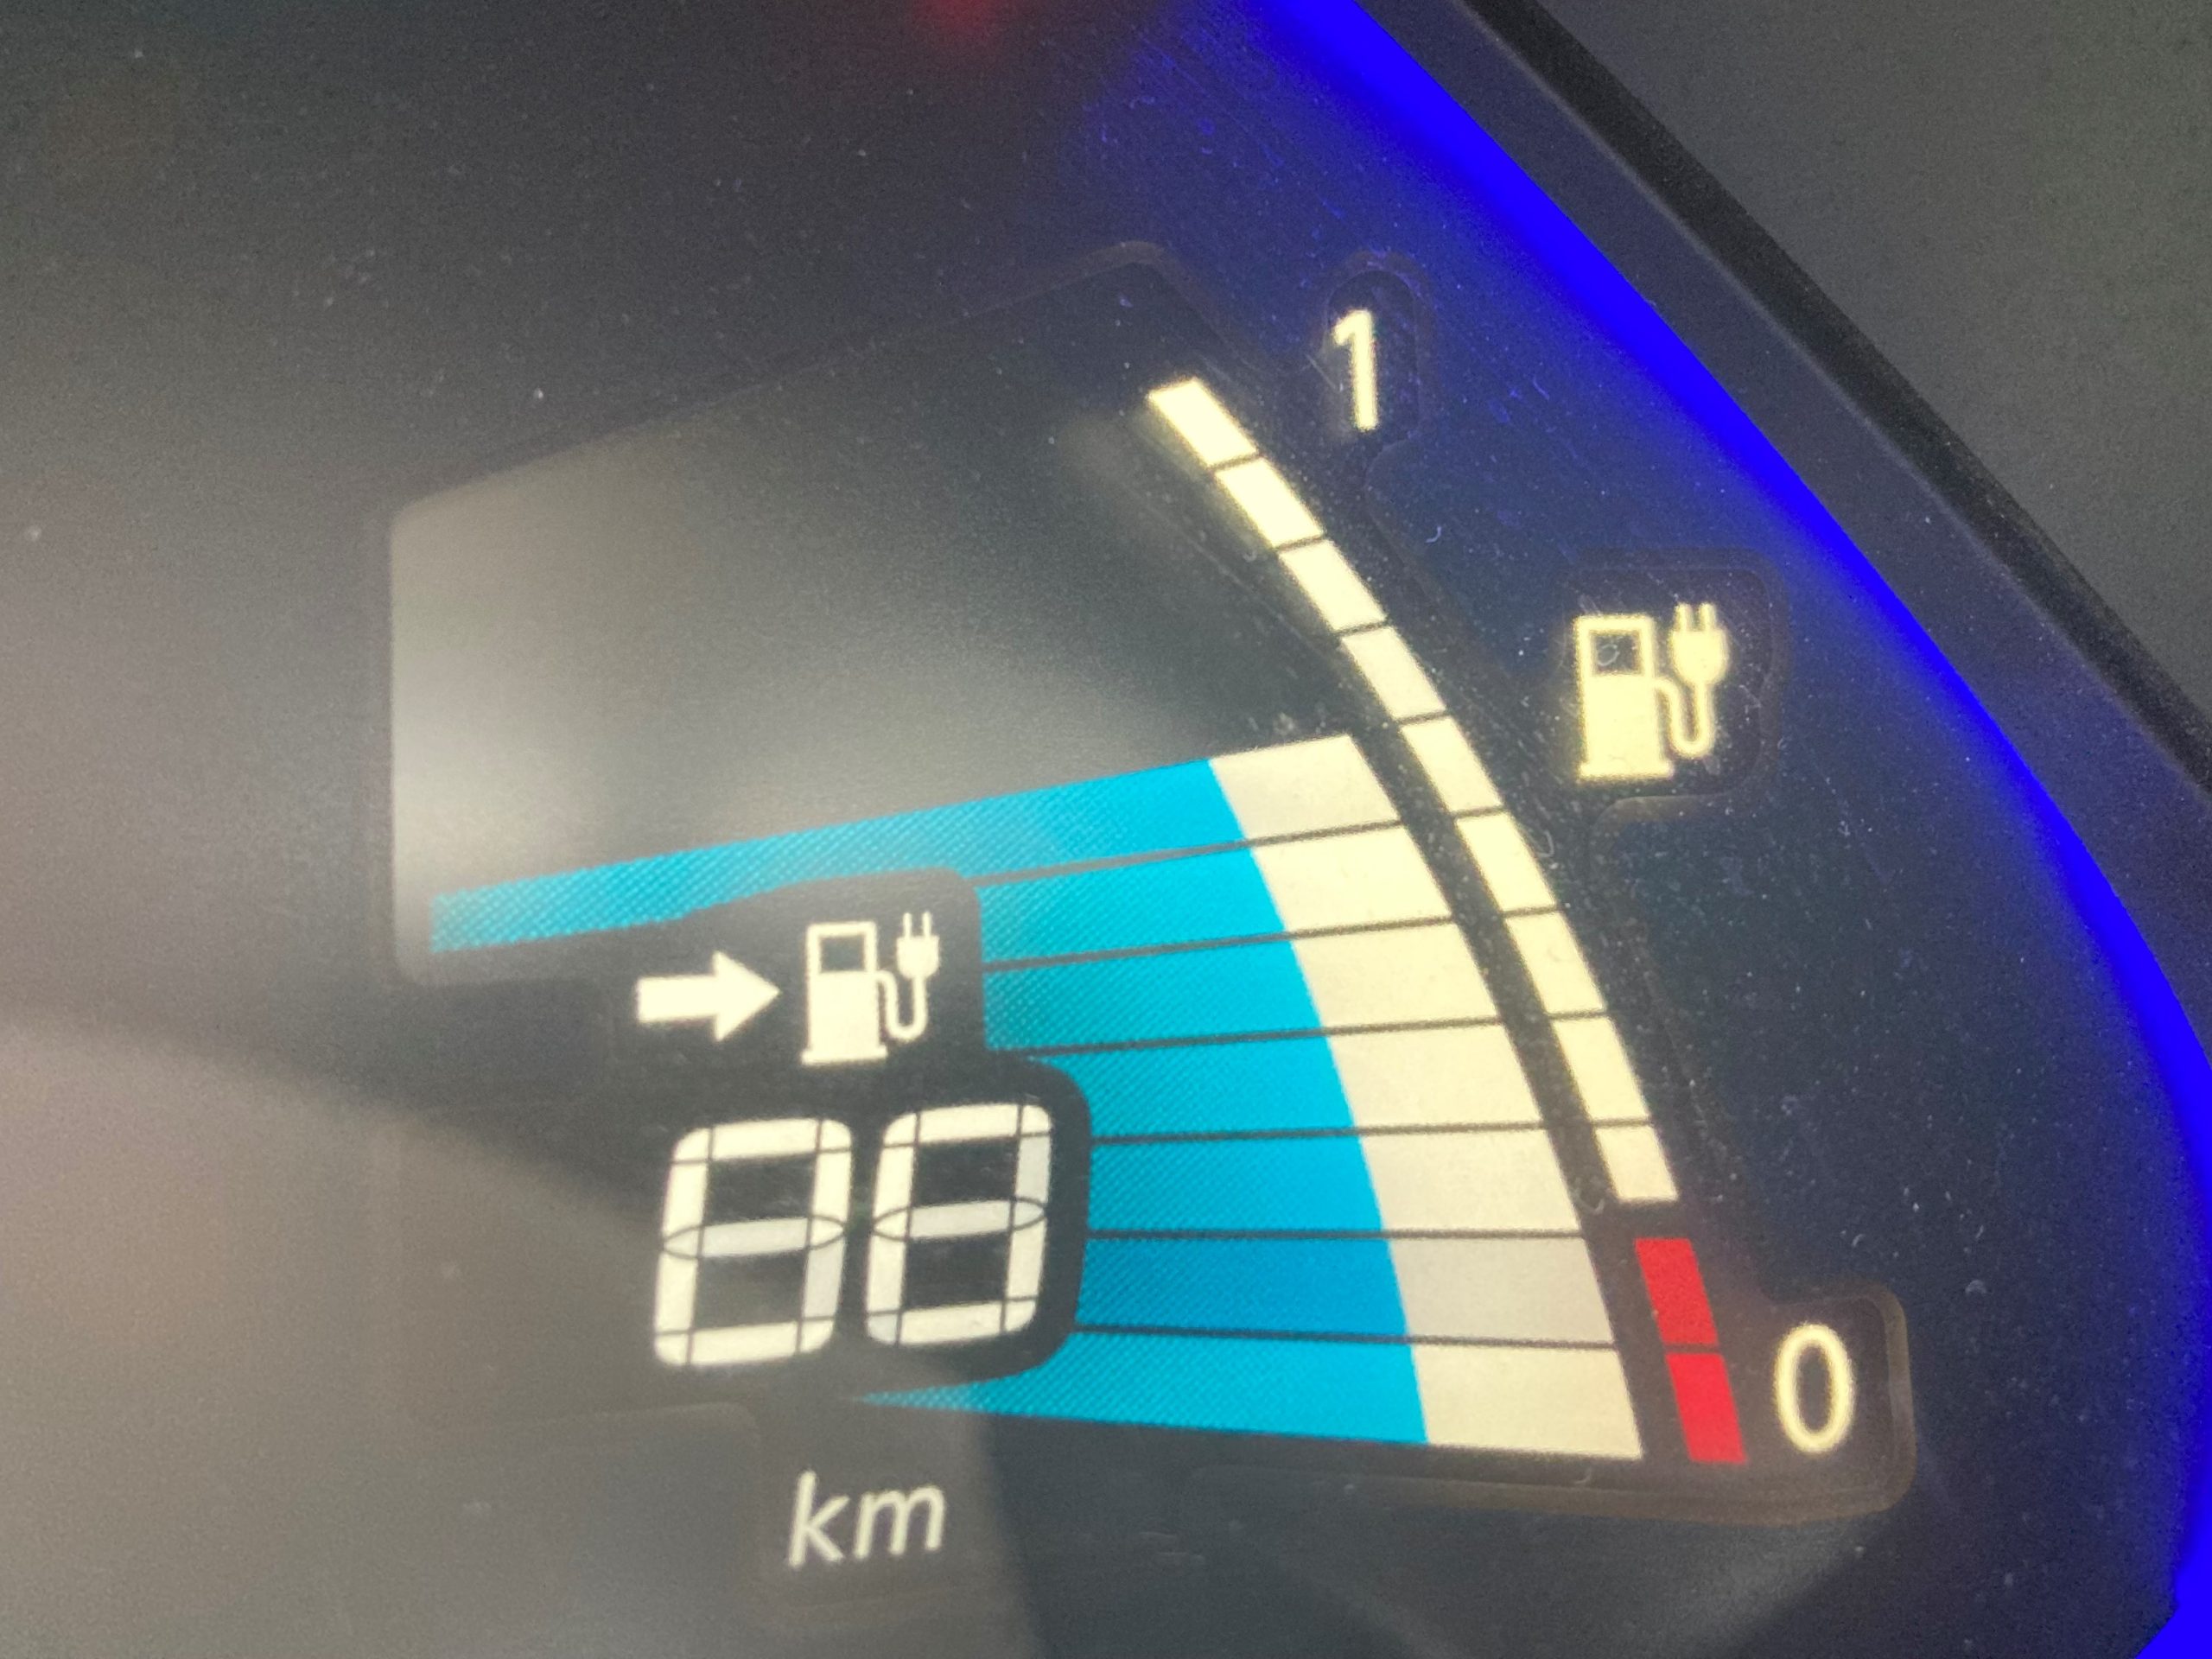 EVなのでガソリン残量計ではなく、電気残量計がメーター内に表示される